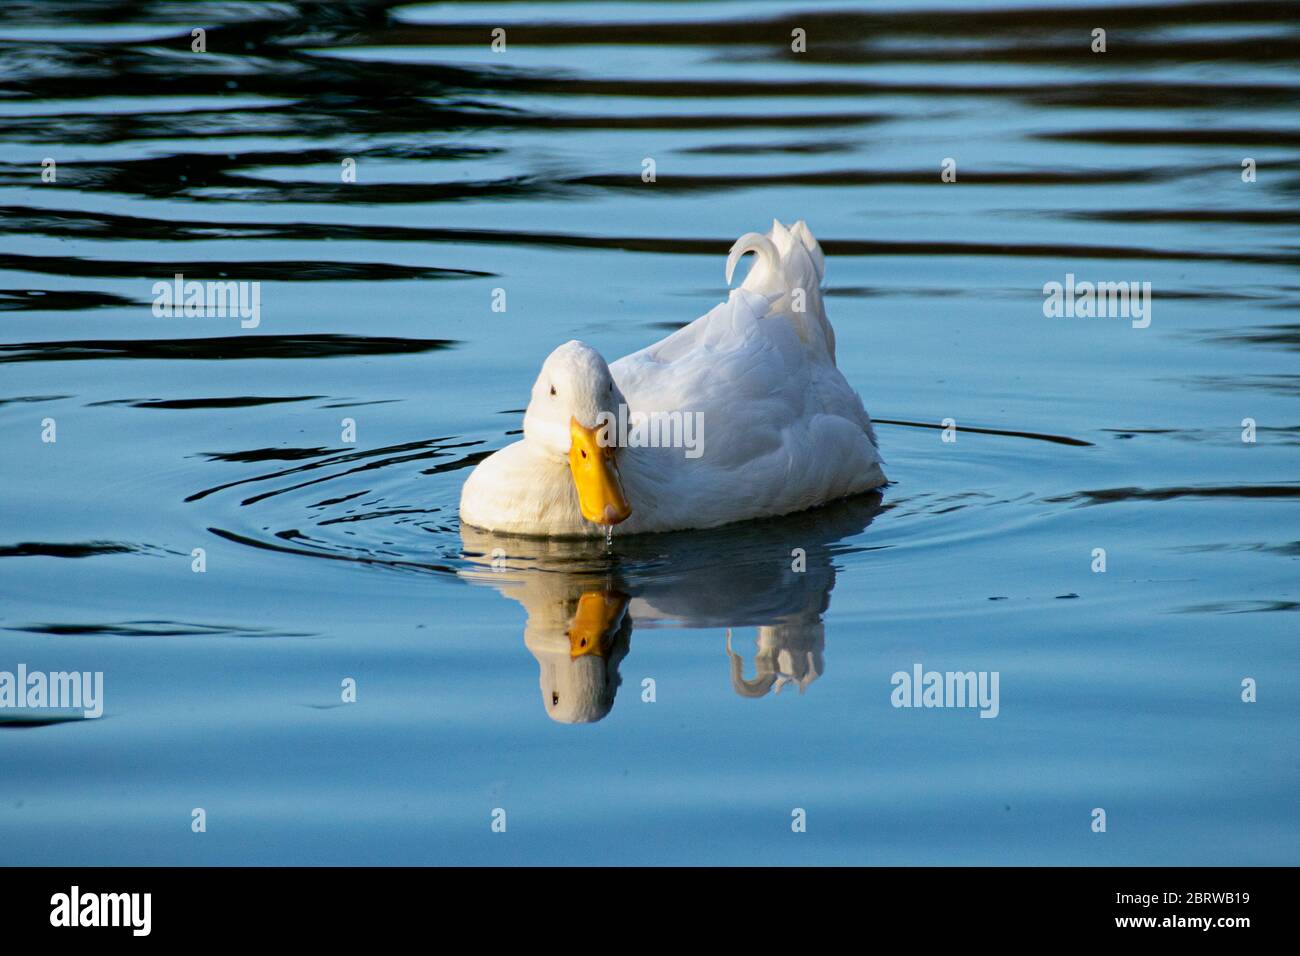 White pekin ducks swimming on a still calm lake with water reflection Stock Photo